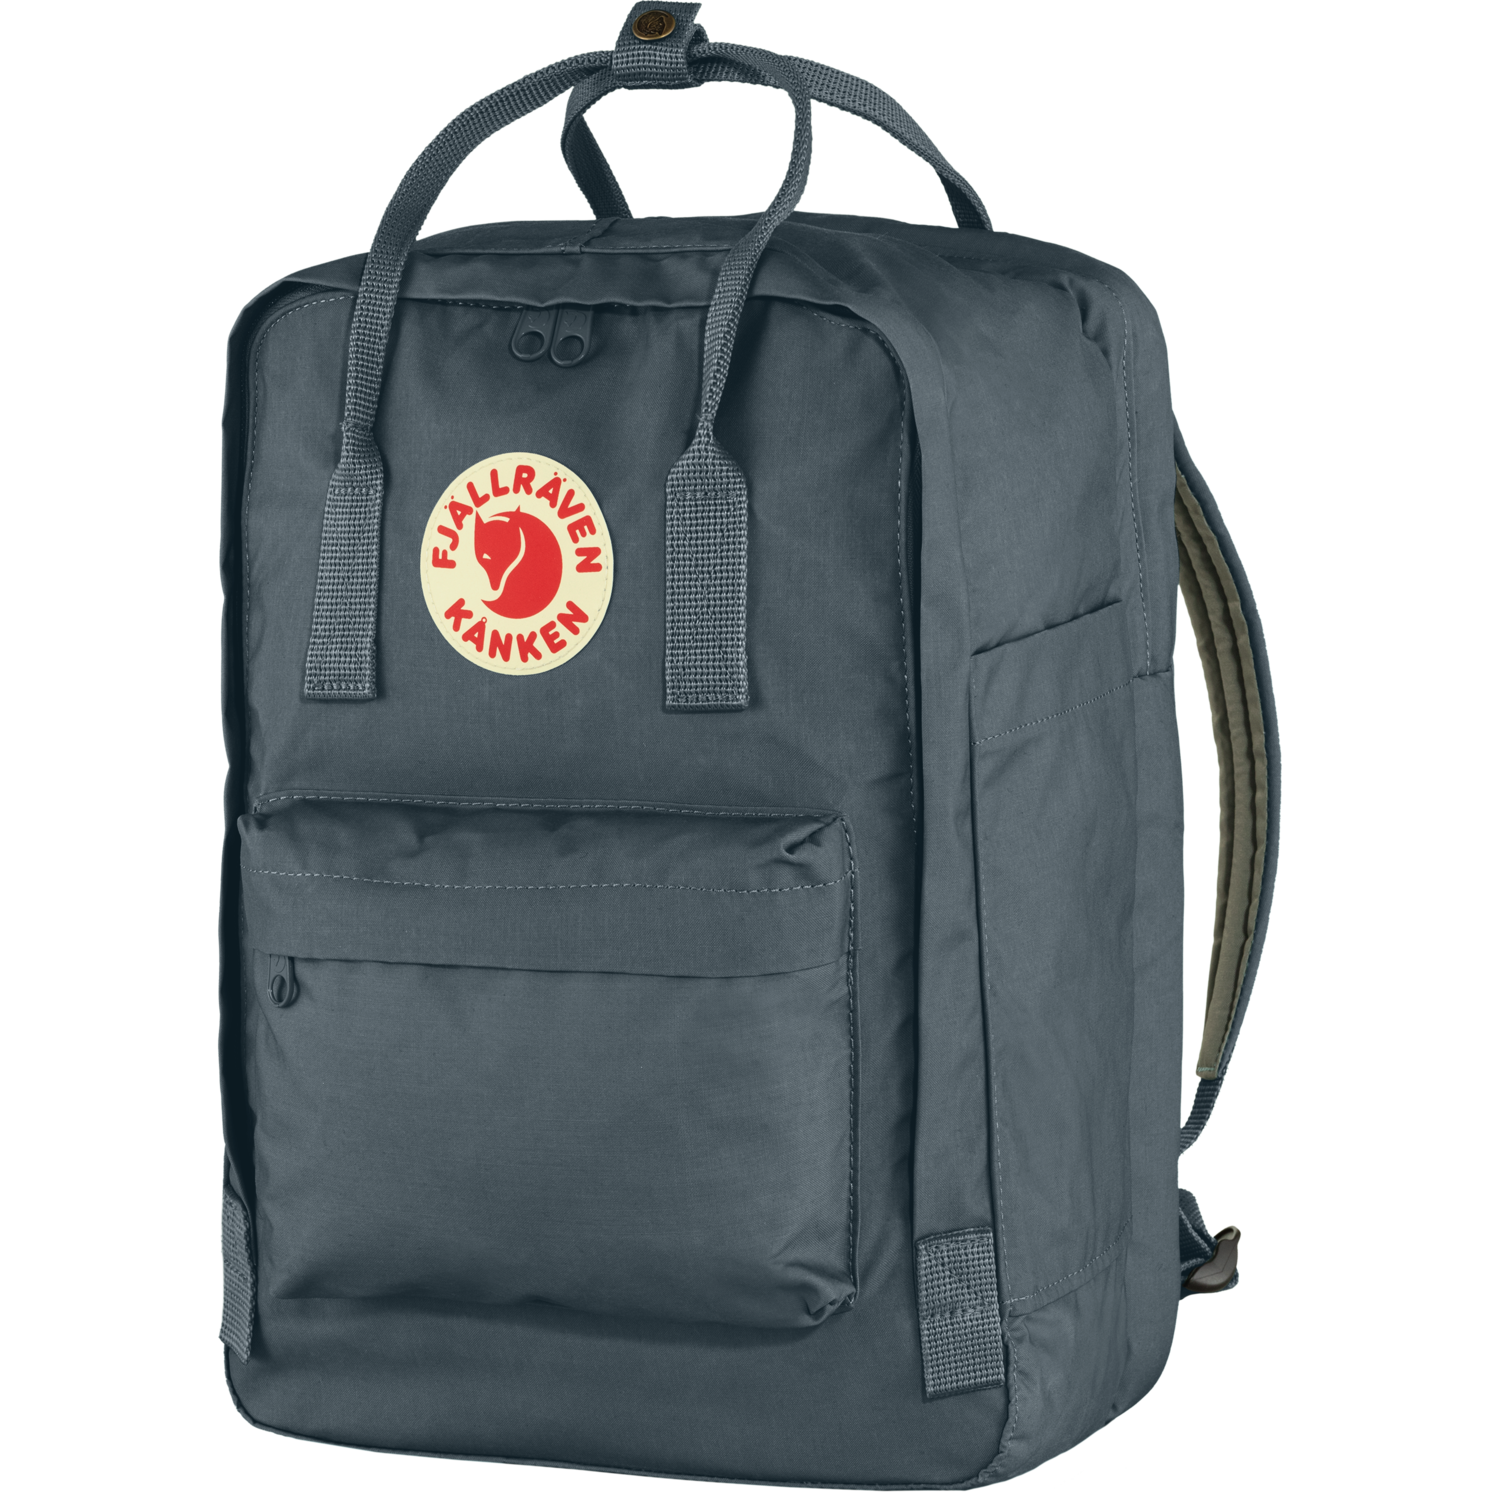 fjallraven kanken laptop backpack in graphite colure 